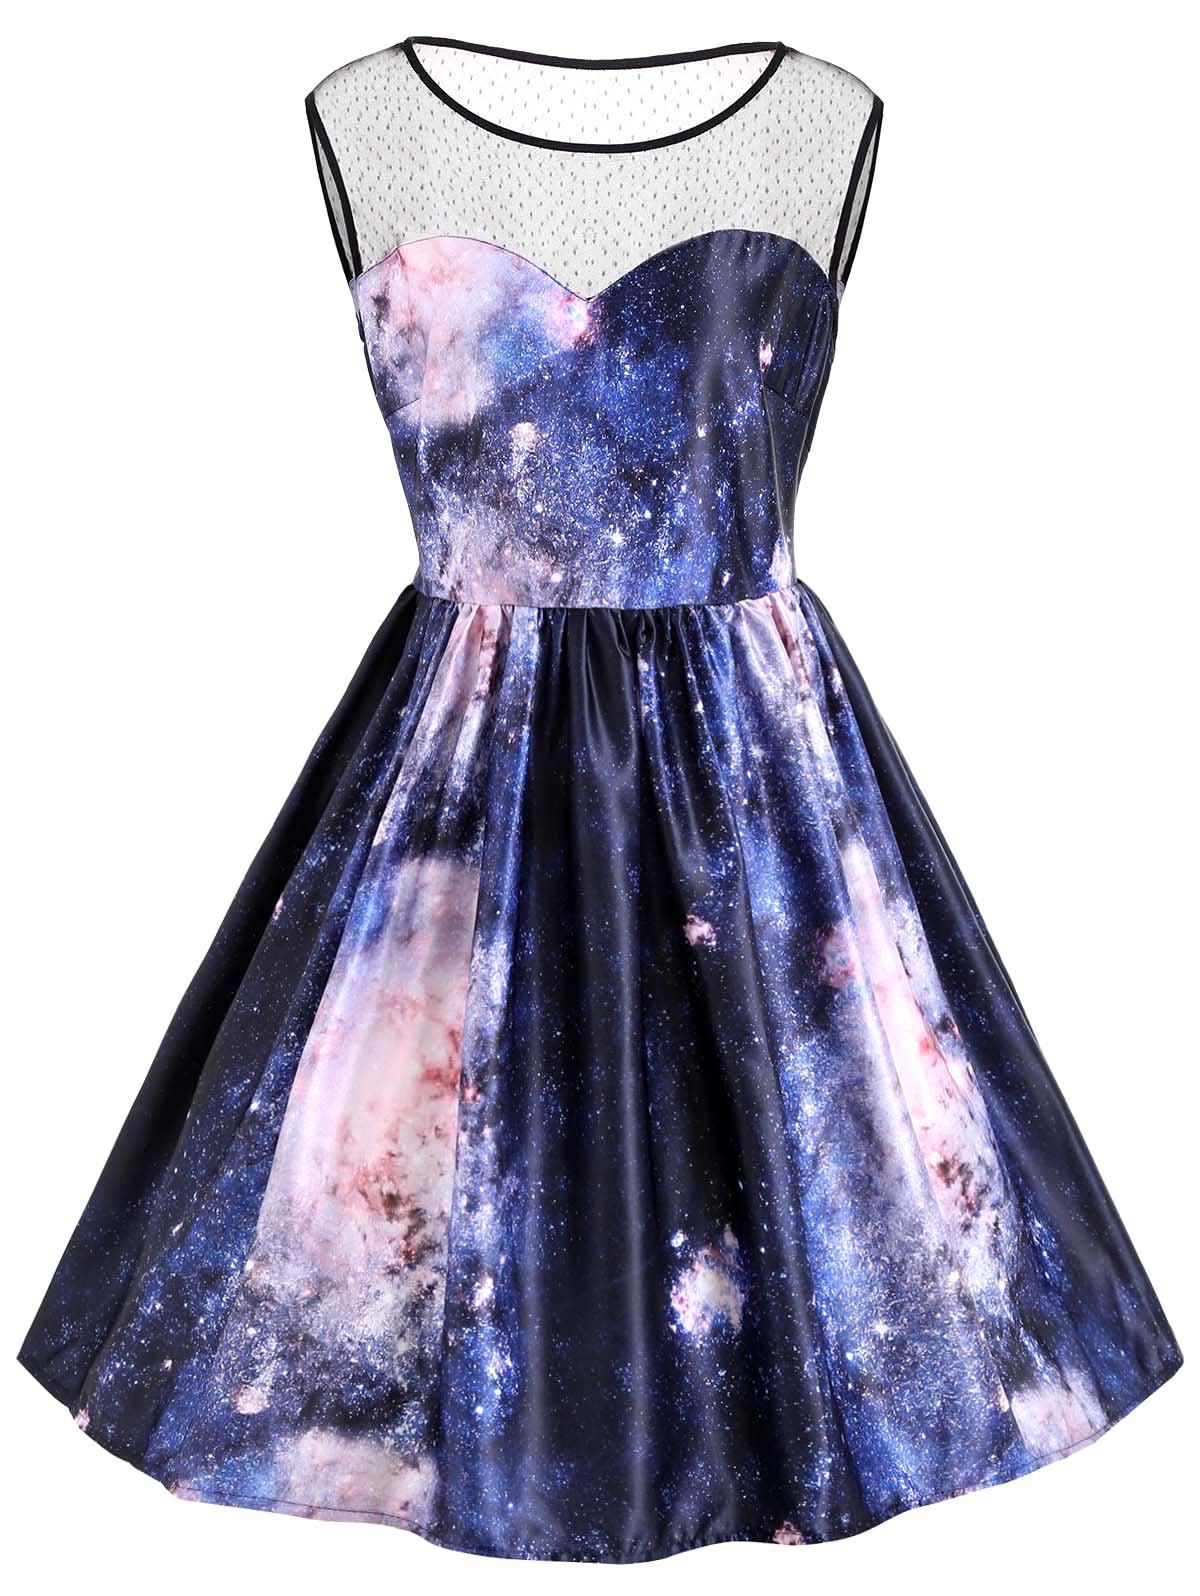 Платье галактика